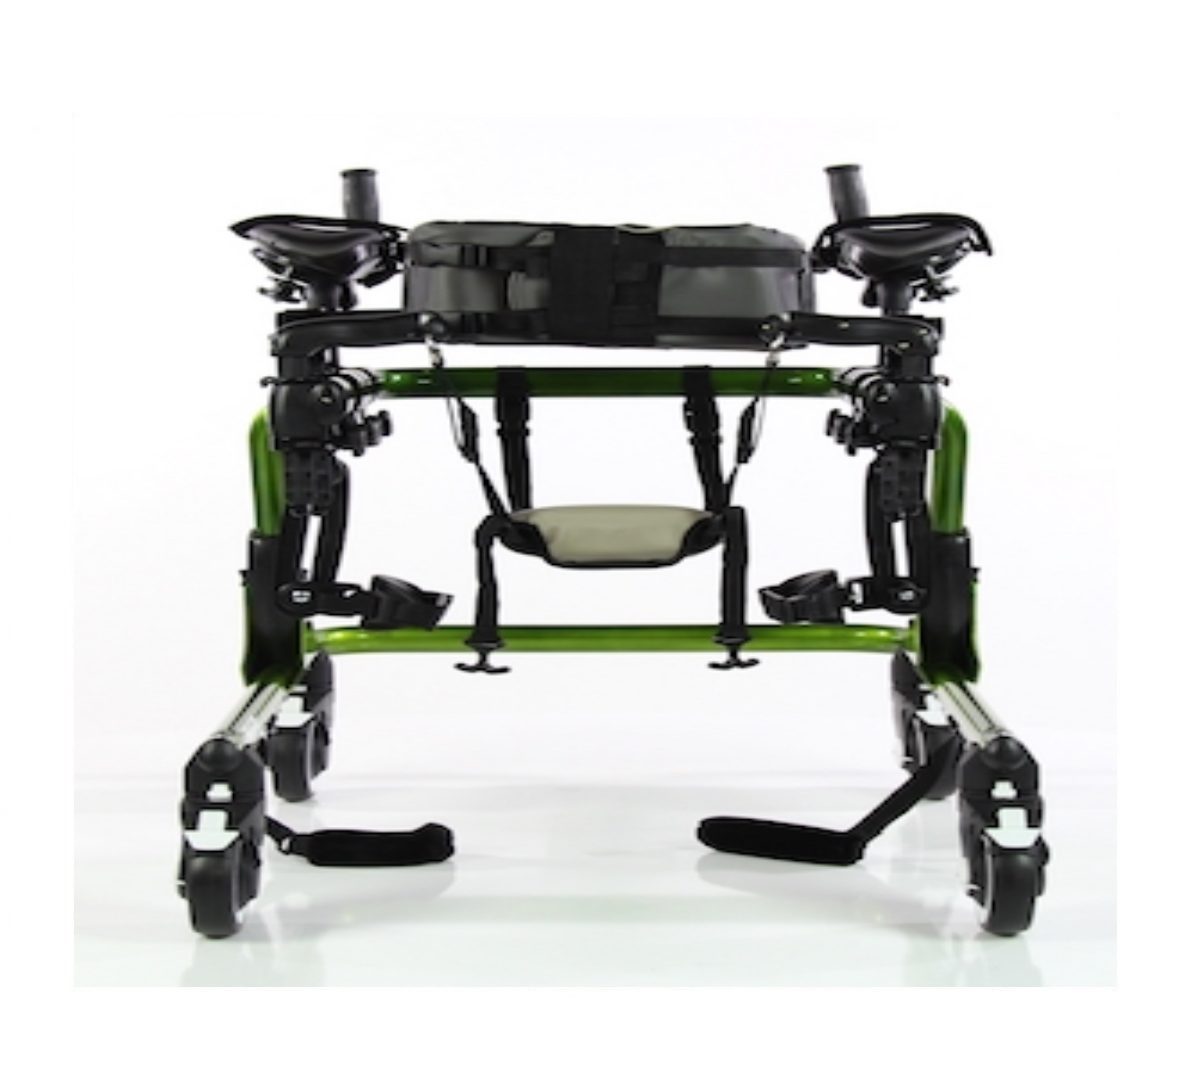 WOLLEX | WG-W944 Pediatrik Walker | Akülü Tekerlekli Sandalye | Tekerlekli Sandalye